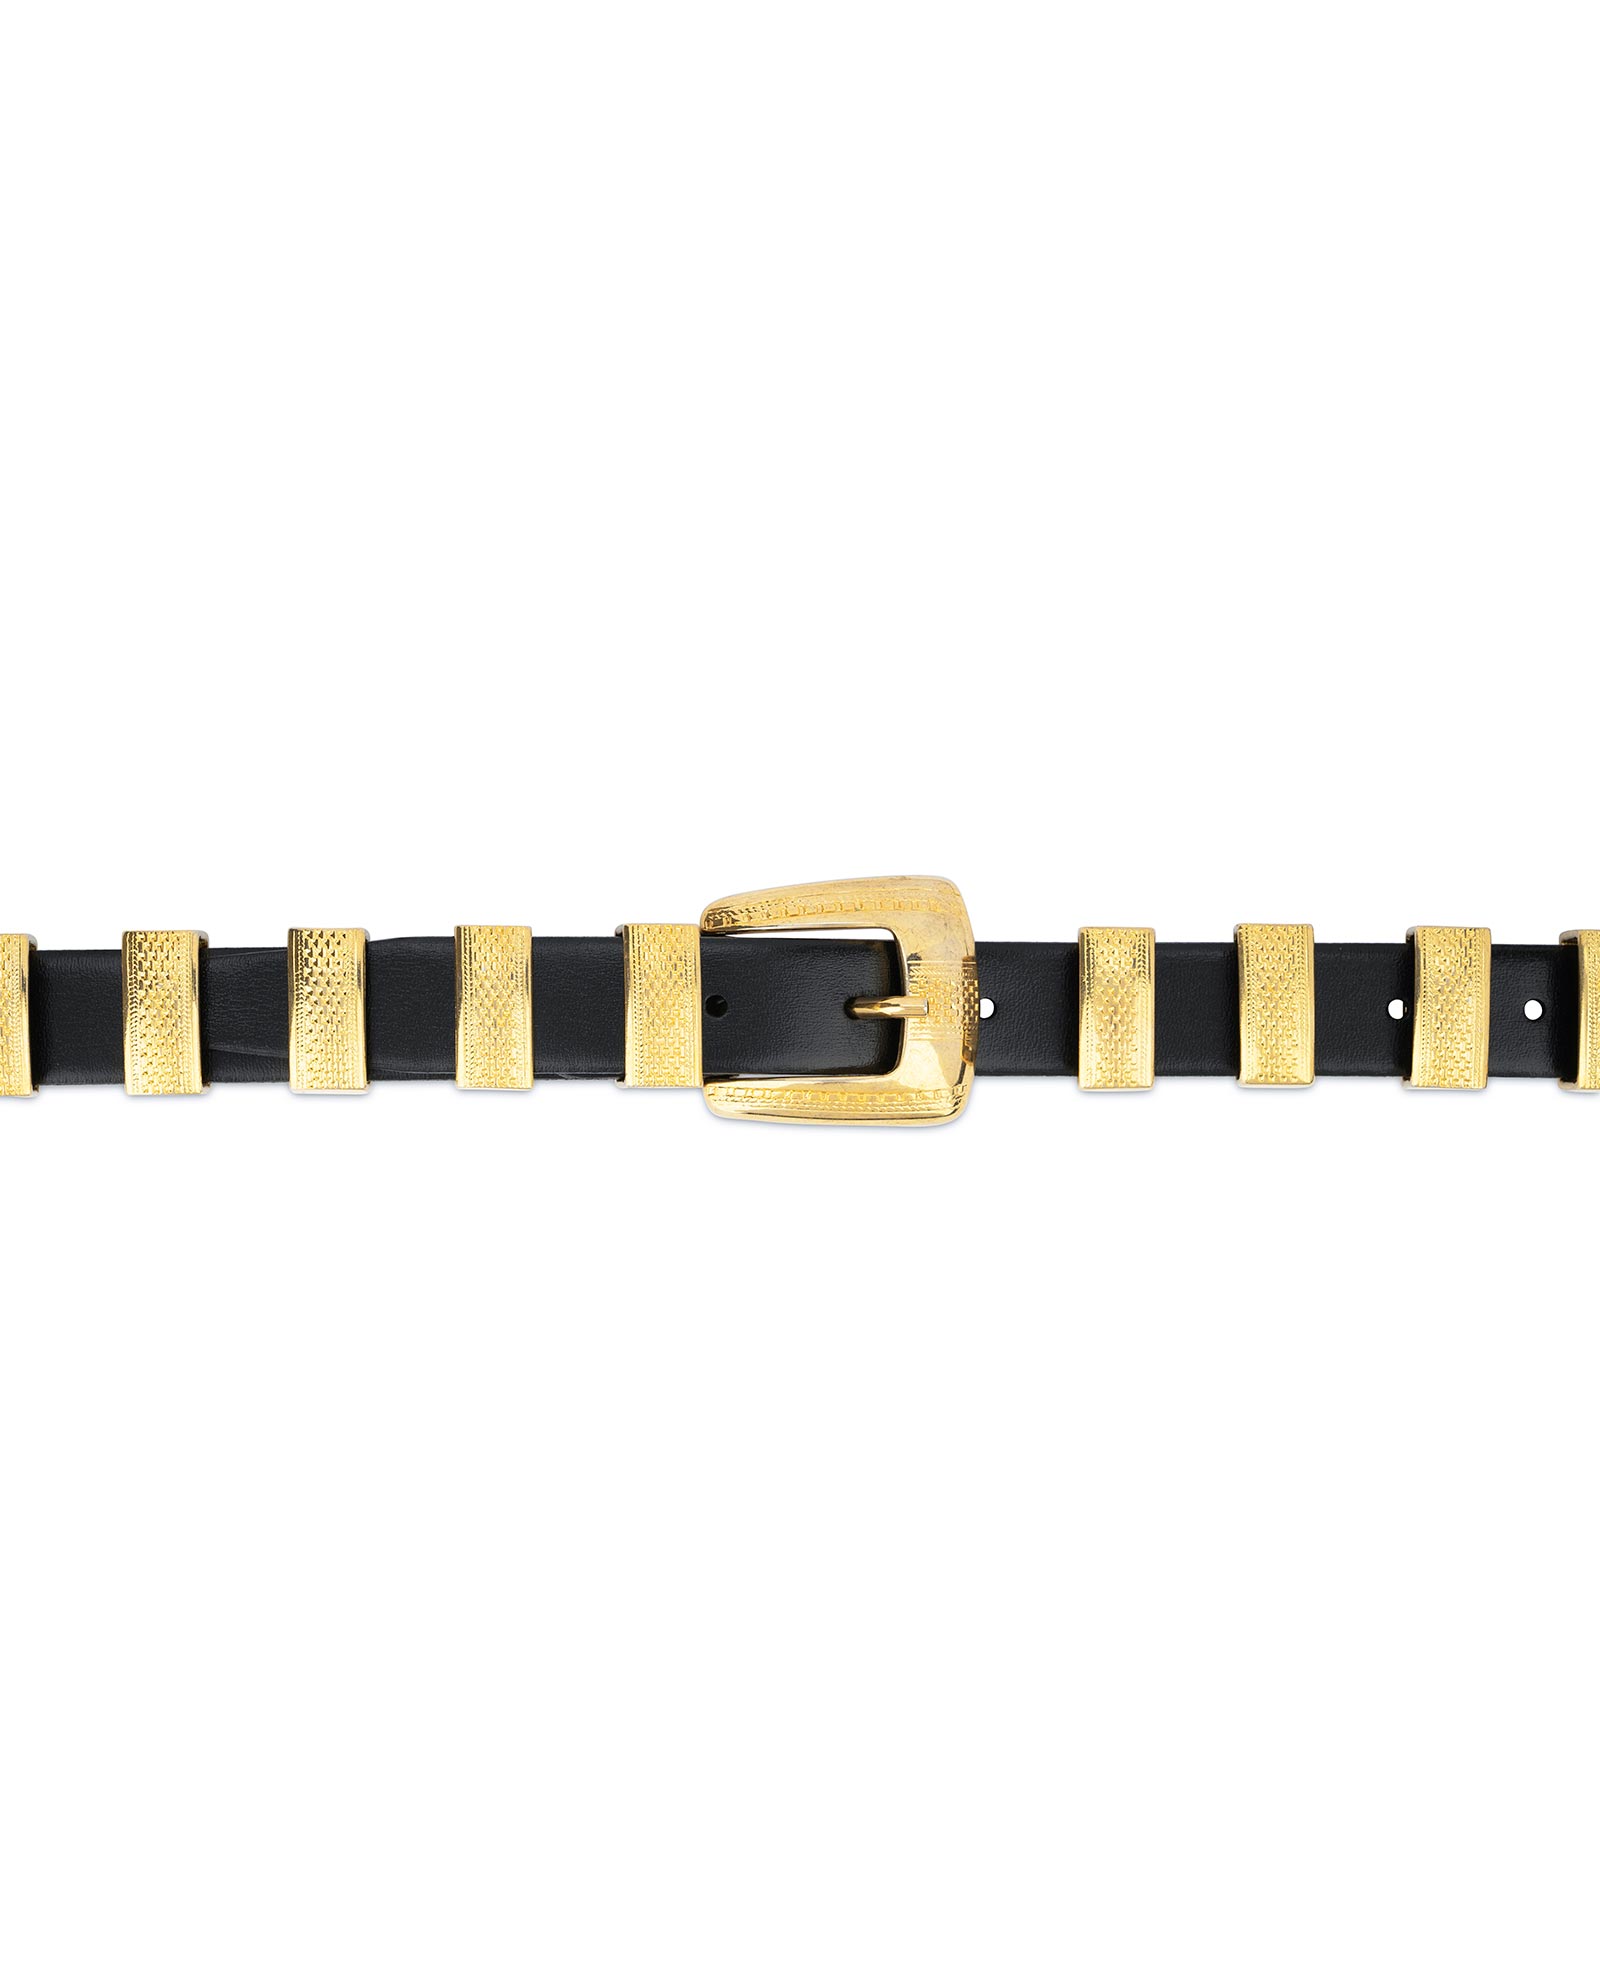 Buy Western Gold Womens Belt | Black Leather | LeatherBeltsOnline.com